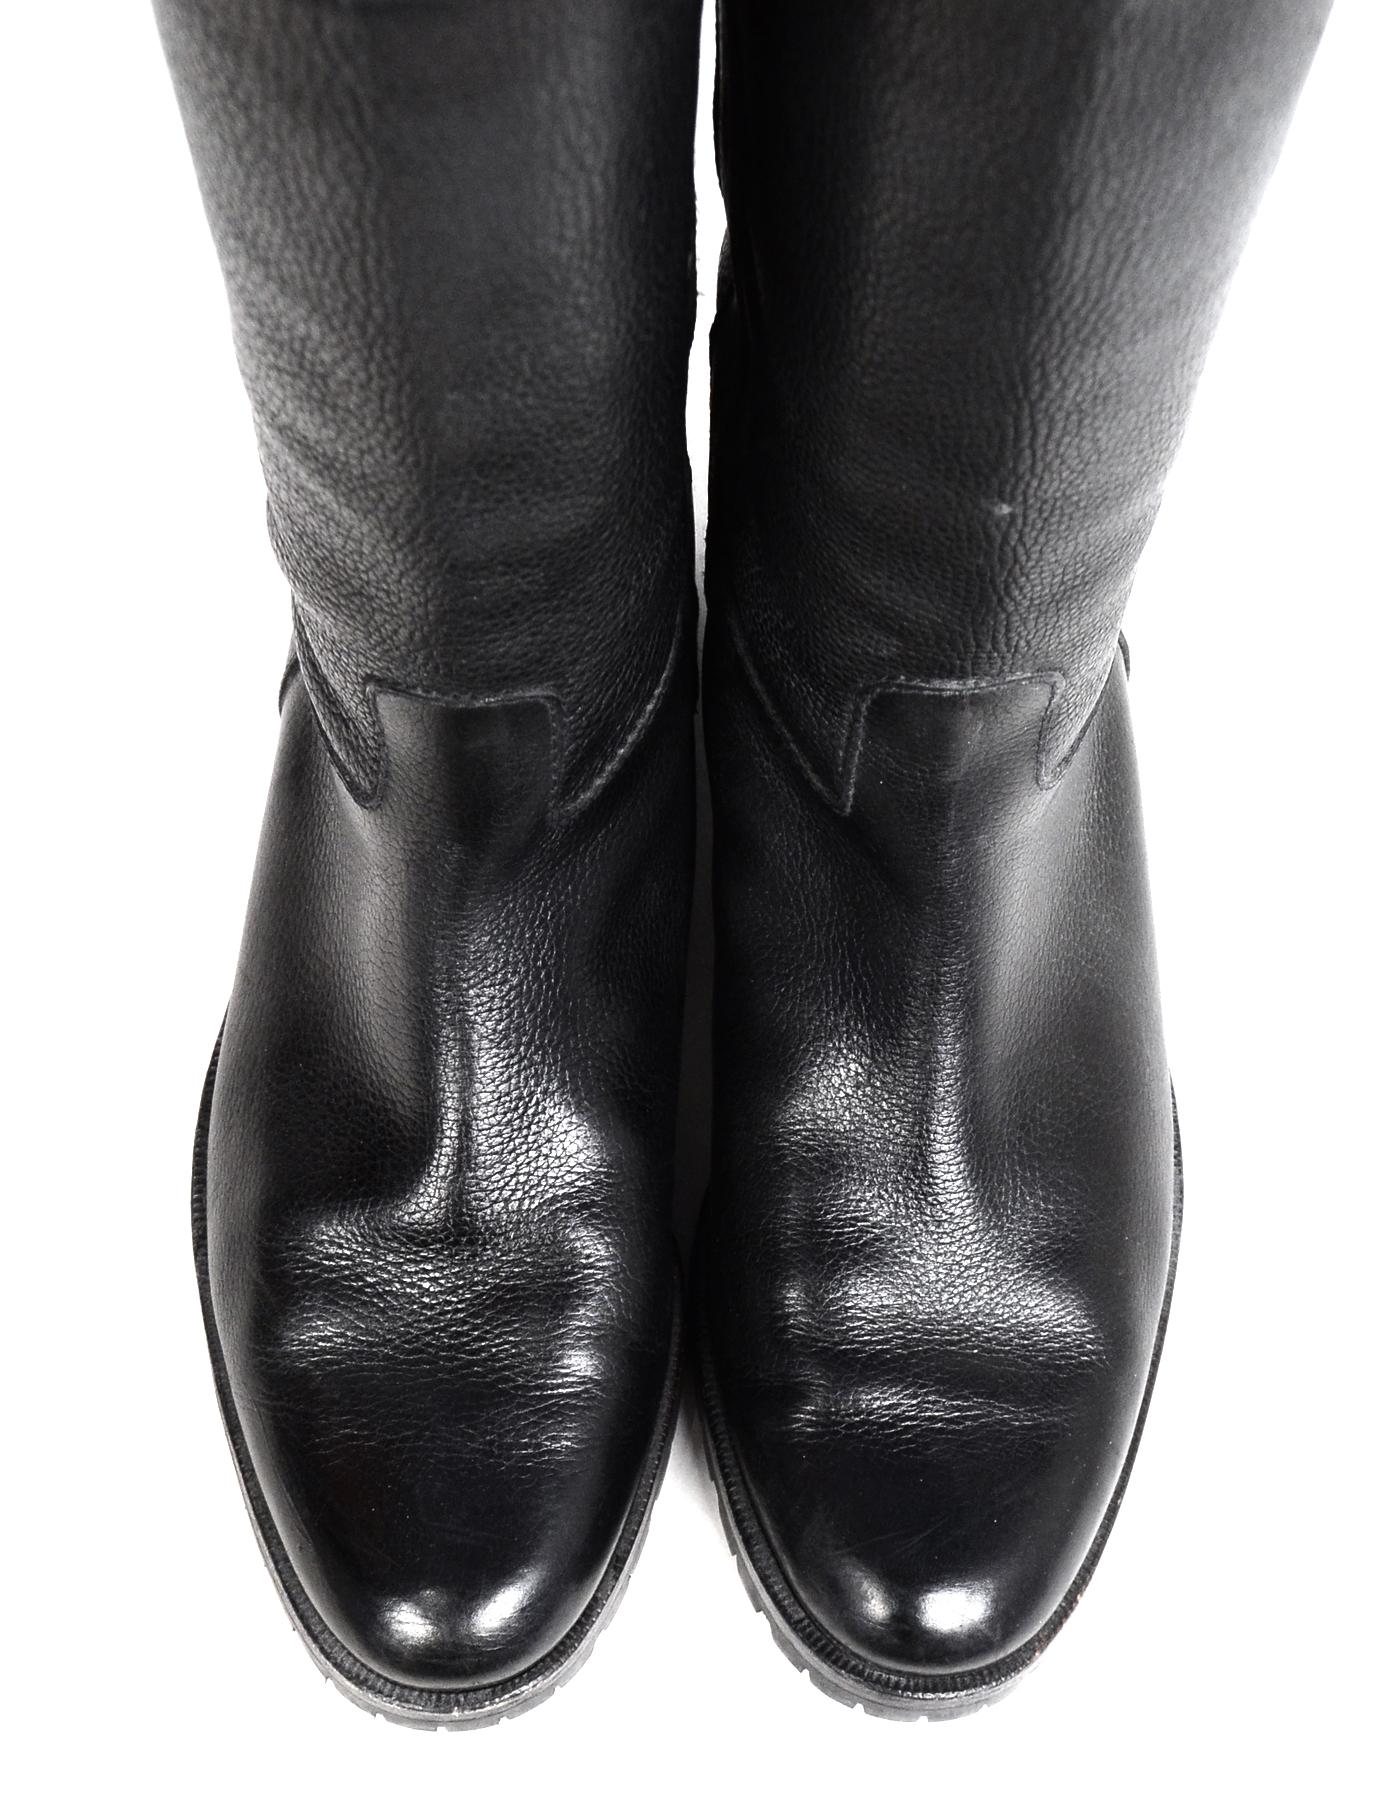 Gravati Black Leather Mid Calf Boots Sz 7.5 2